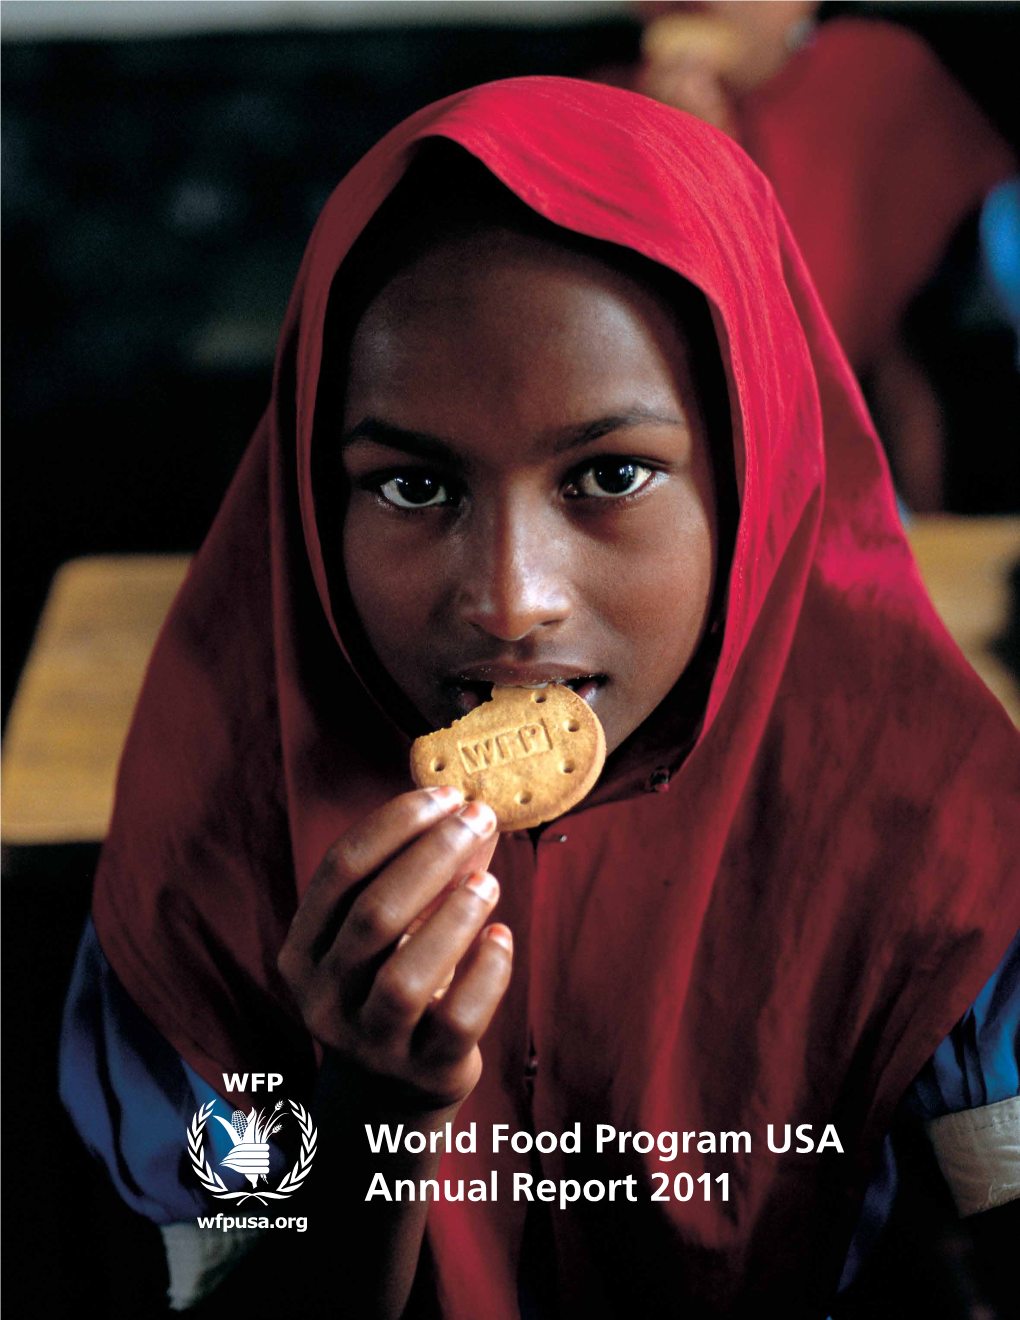 World Food Program USA Annual Report 2011